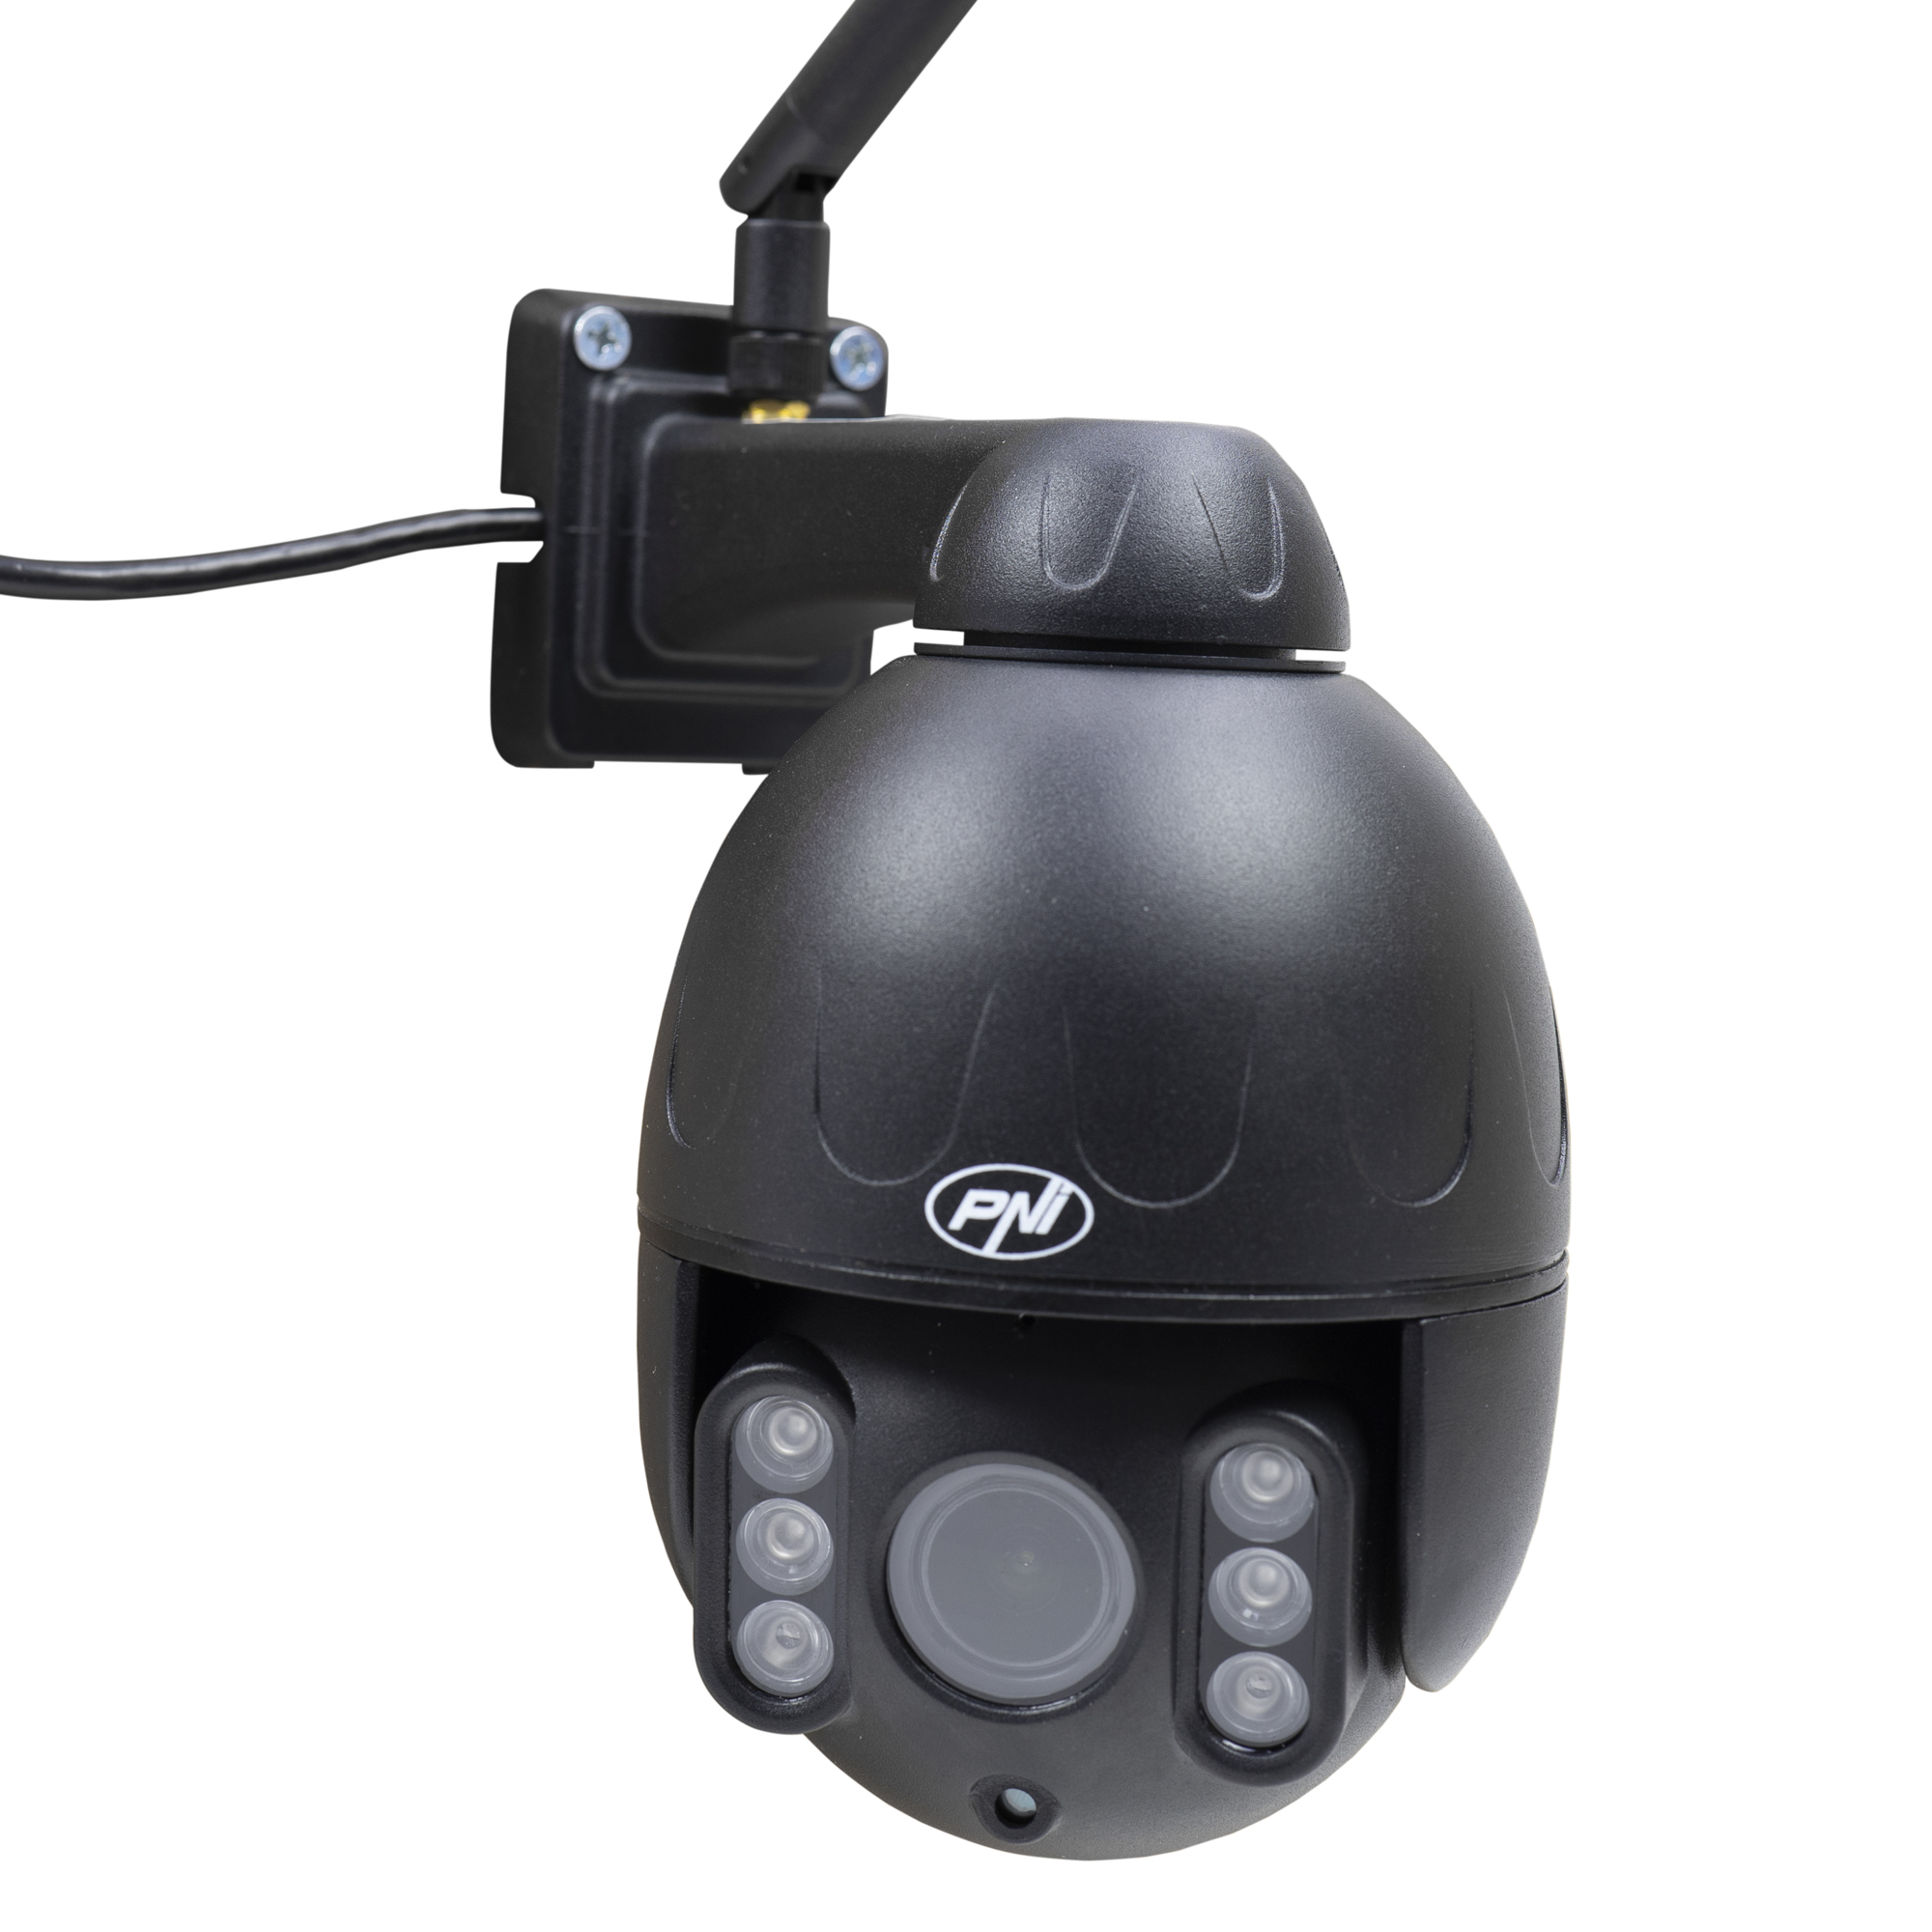 Überwachungskamera PNI IP655B,